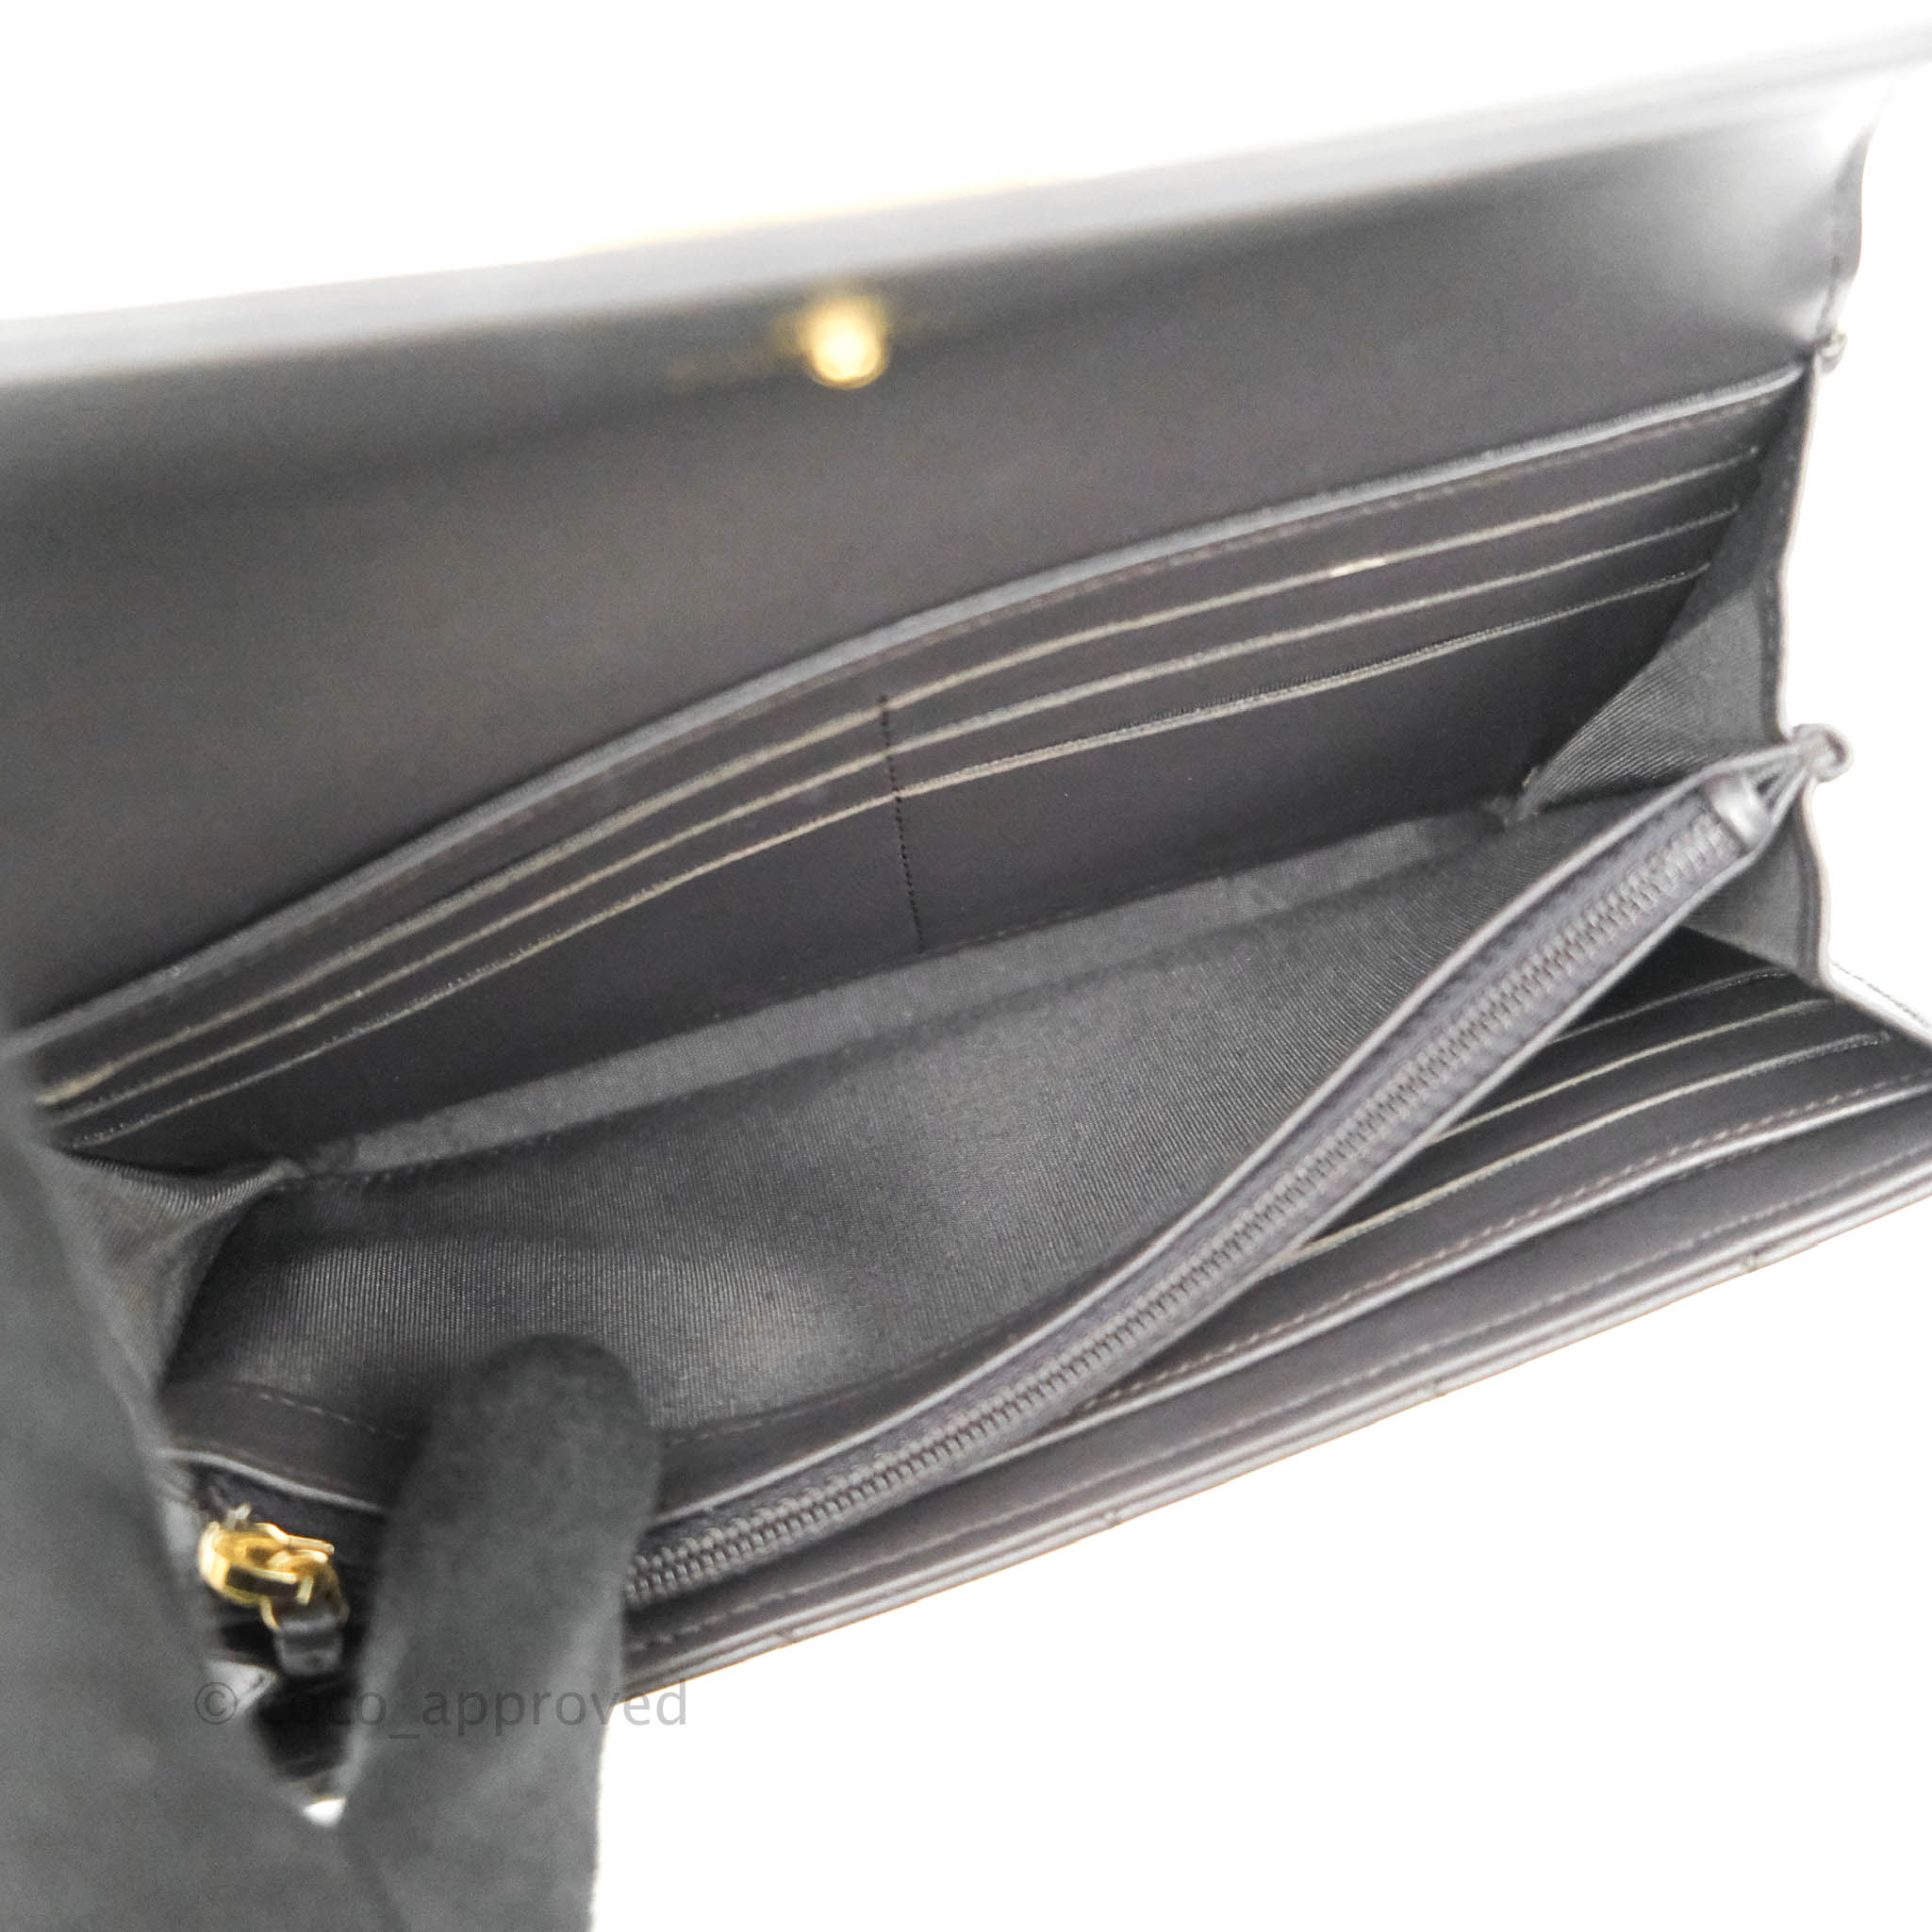 CHANEL Long wallet leather whole pattern wa989